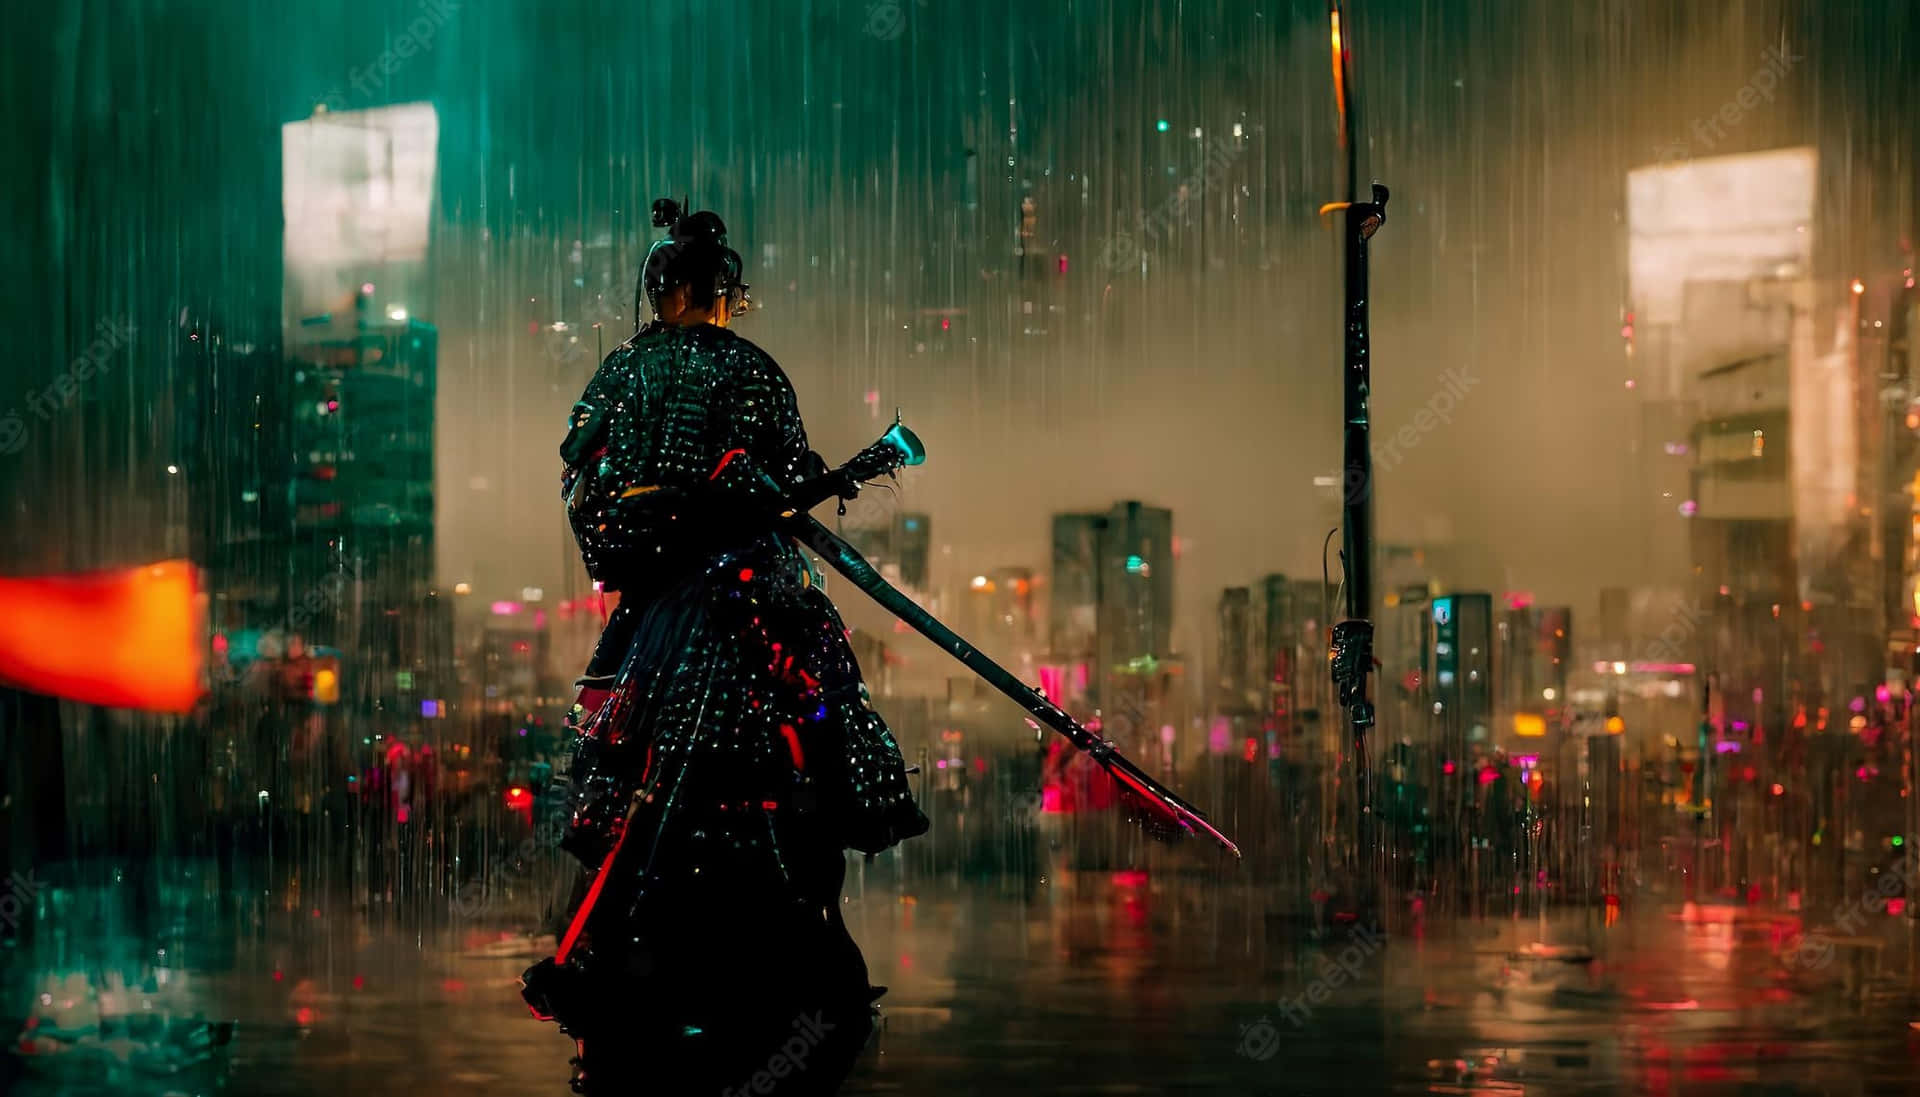 Dark Samurai Lady In Rain Wallpaper